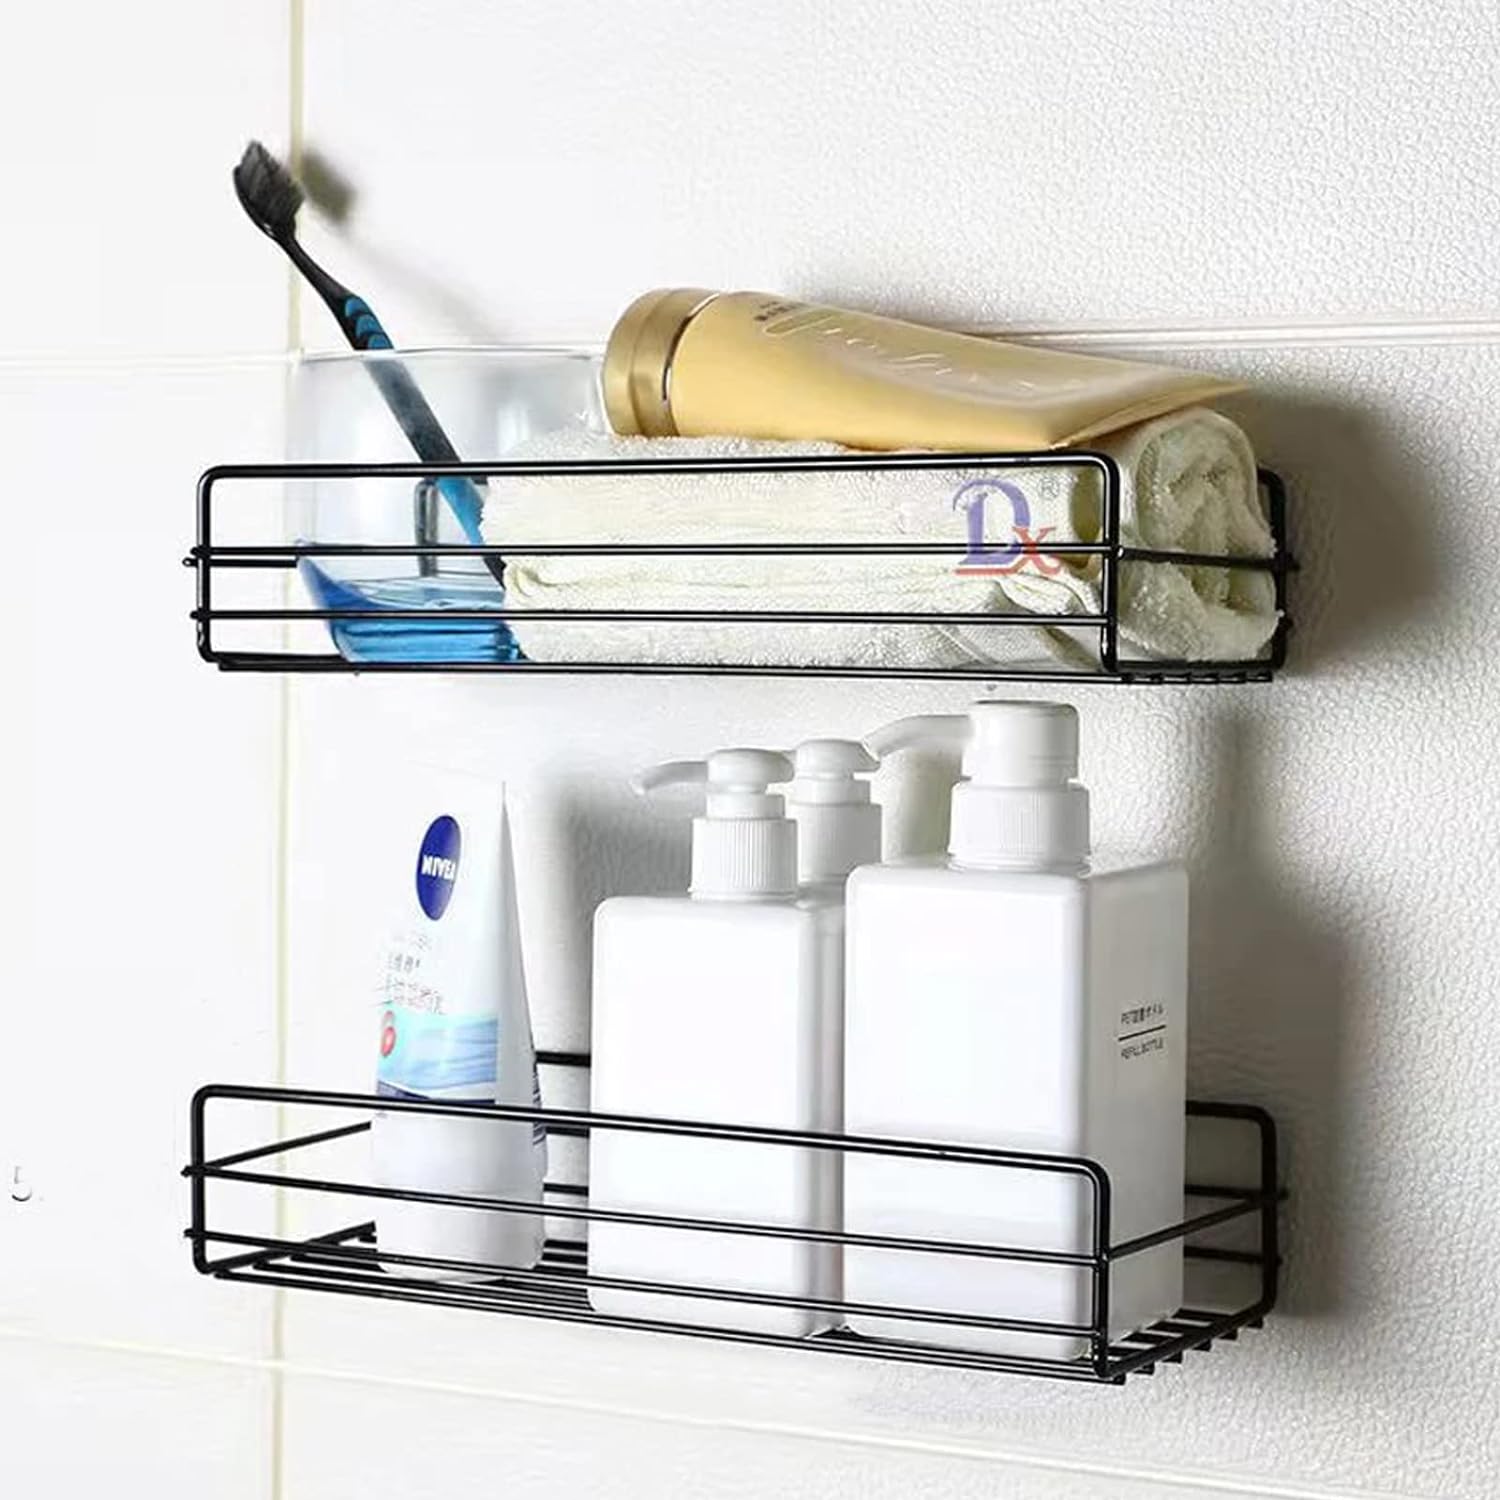 Bathroom organizer rack to organize bathroom items